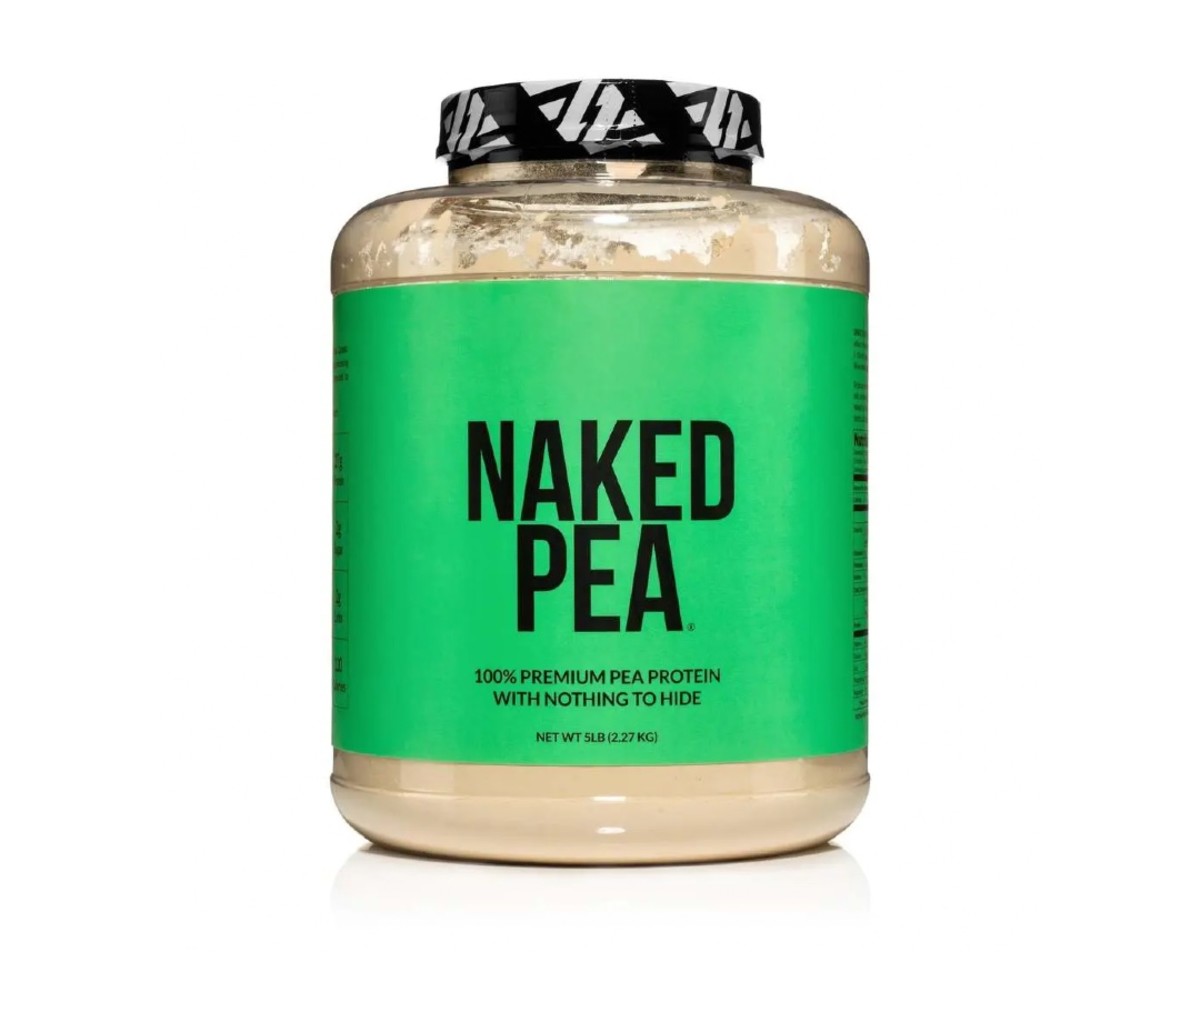 Naked pea protein